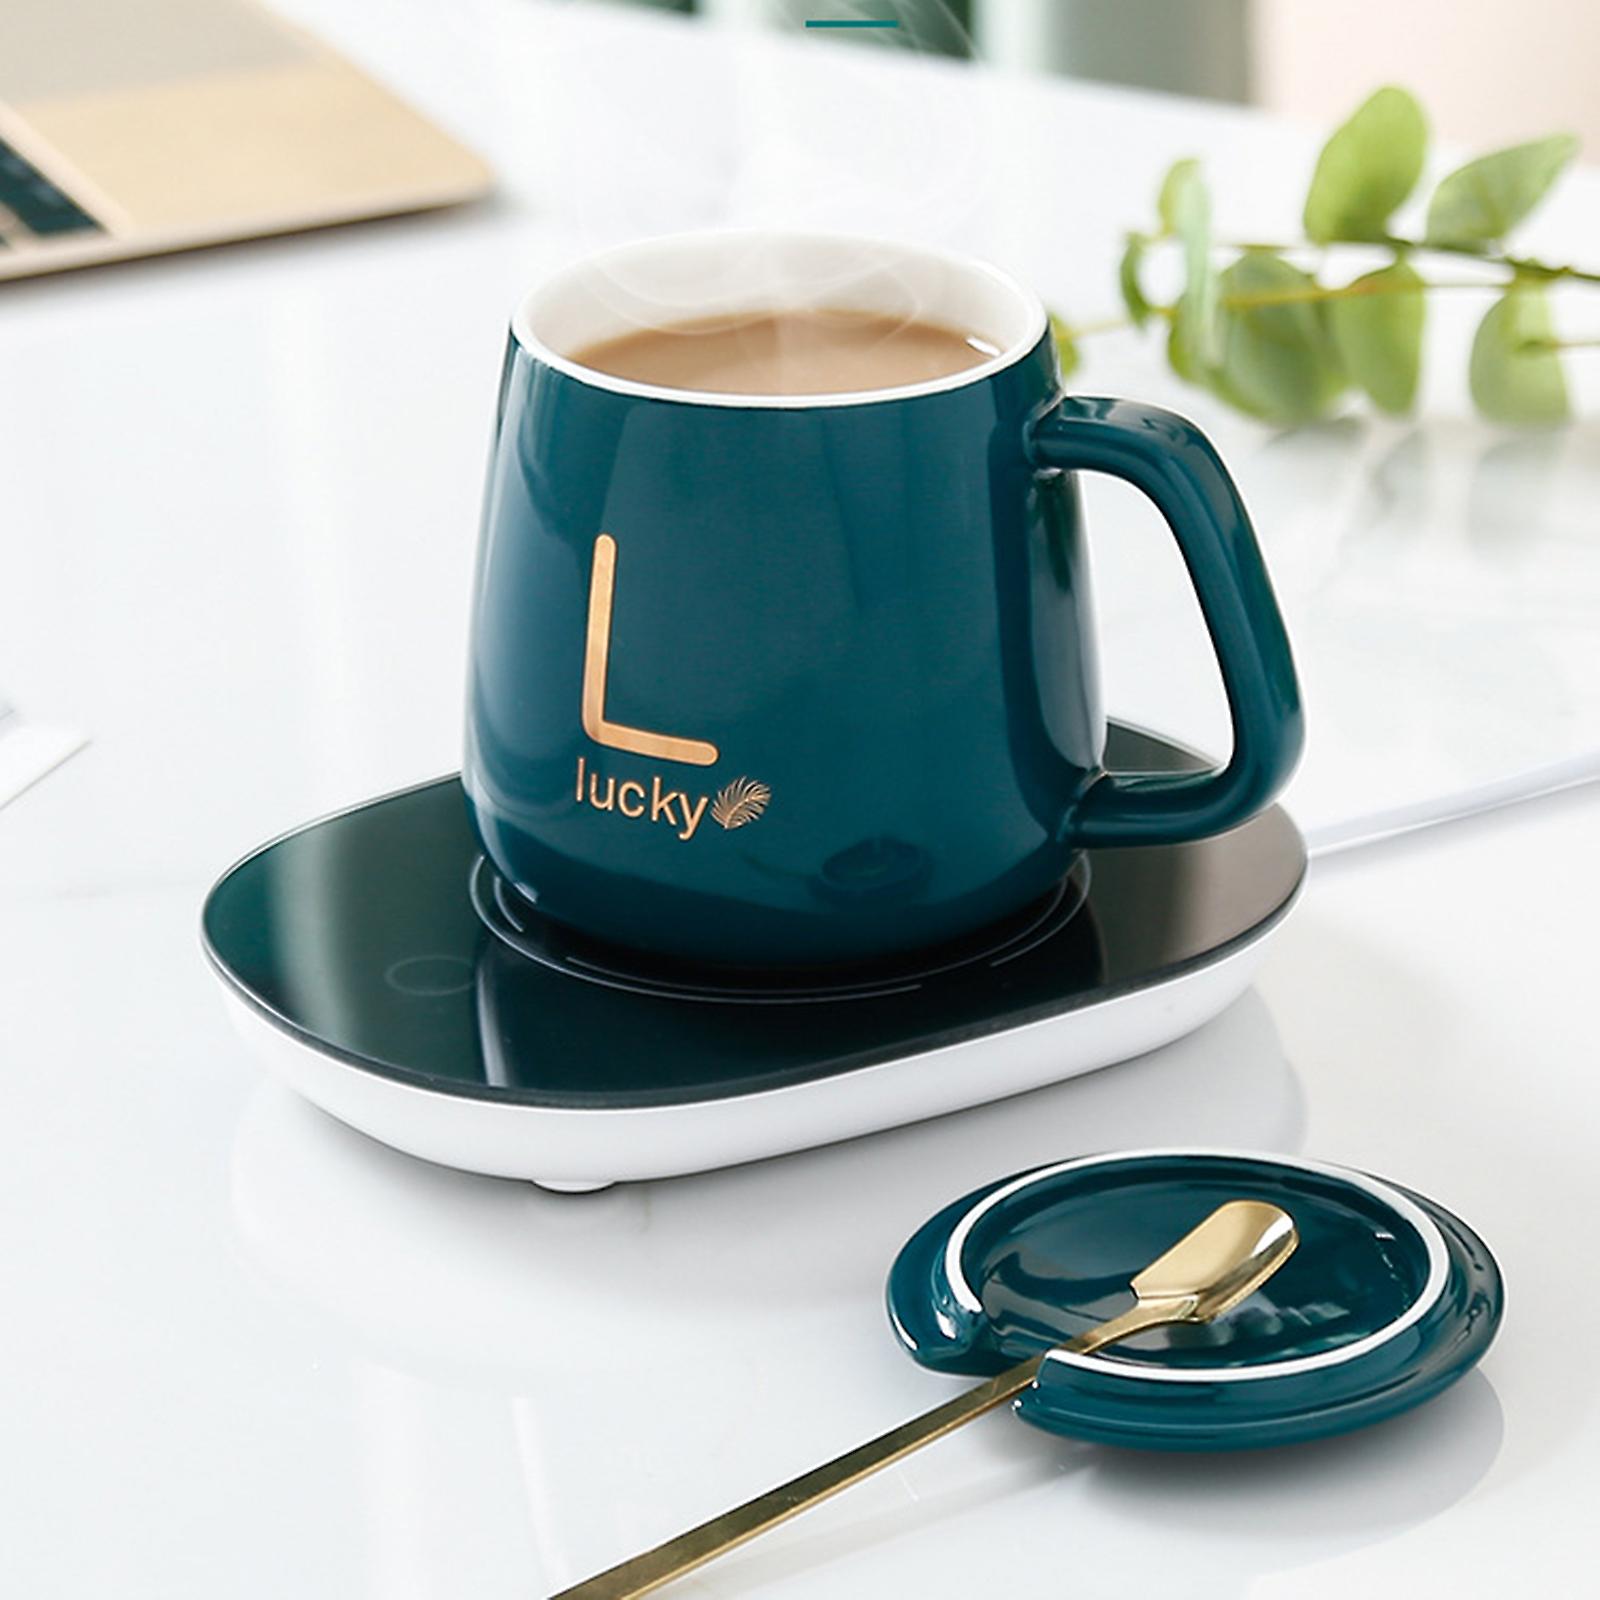 All In A Days Work - Sims Ceramic Mugs Coffee Cups Milk Tea Mug